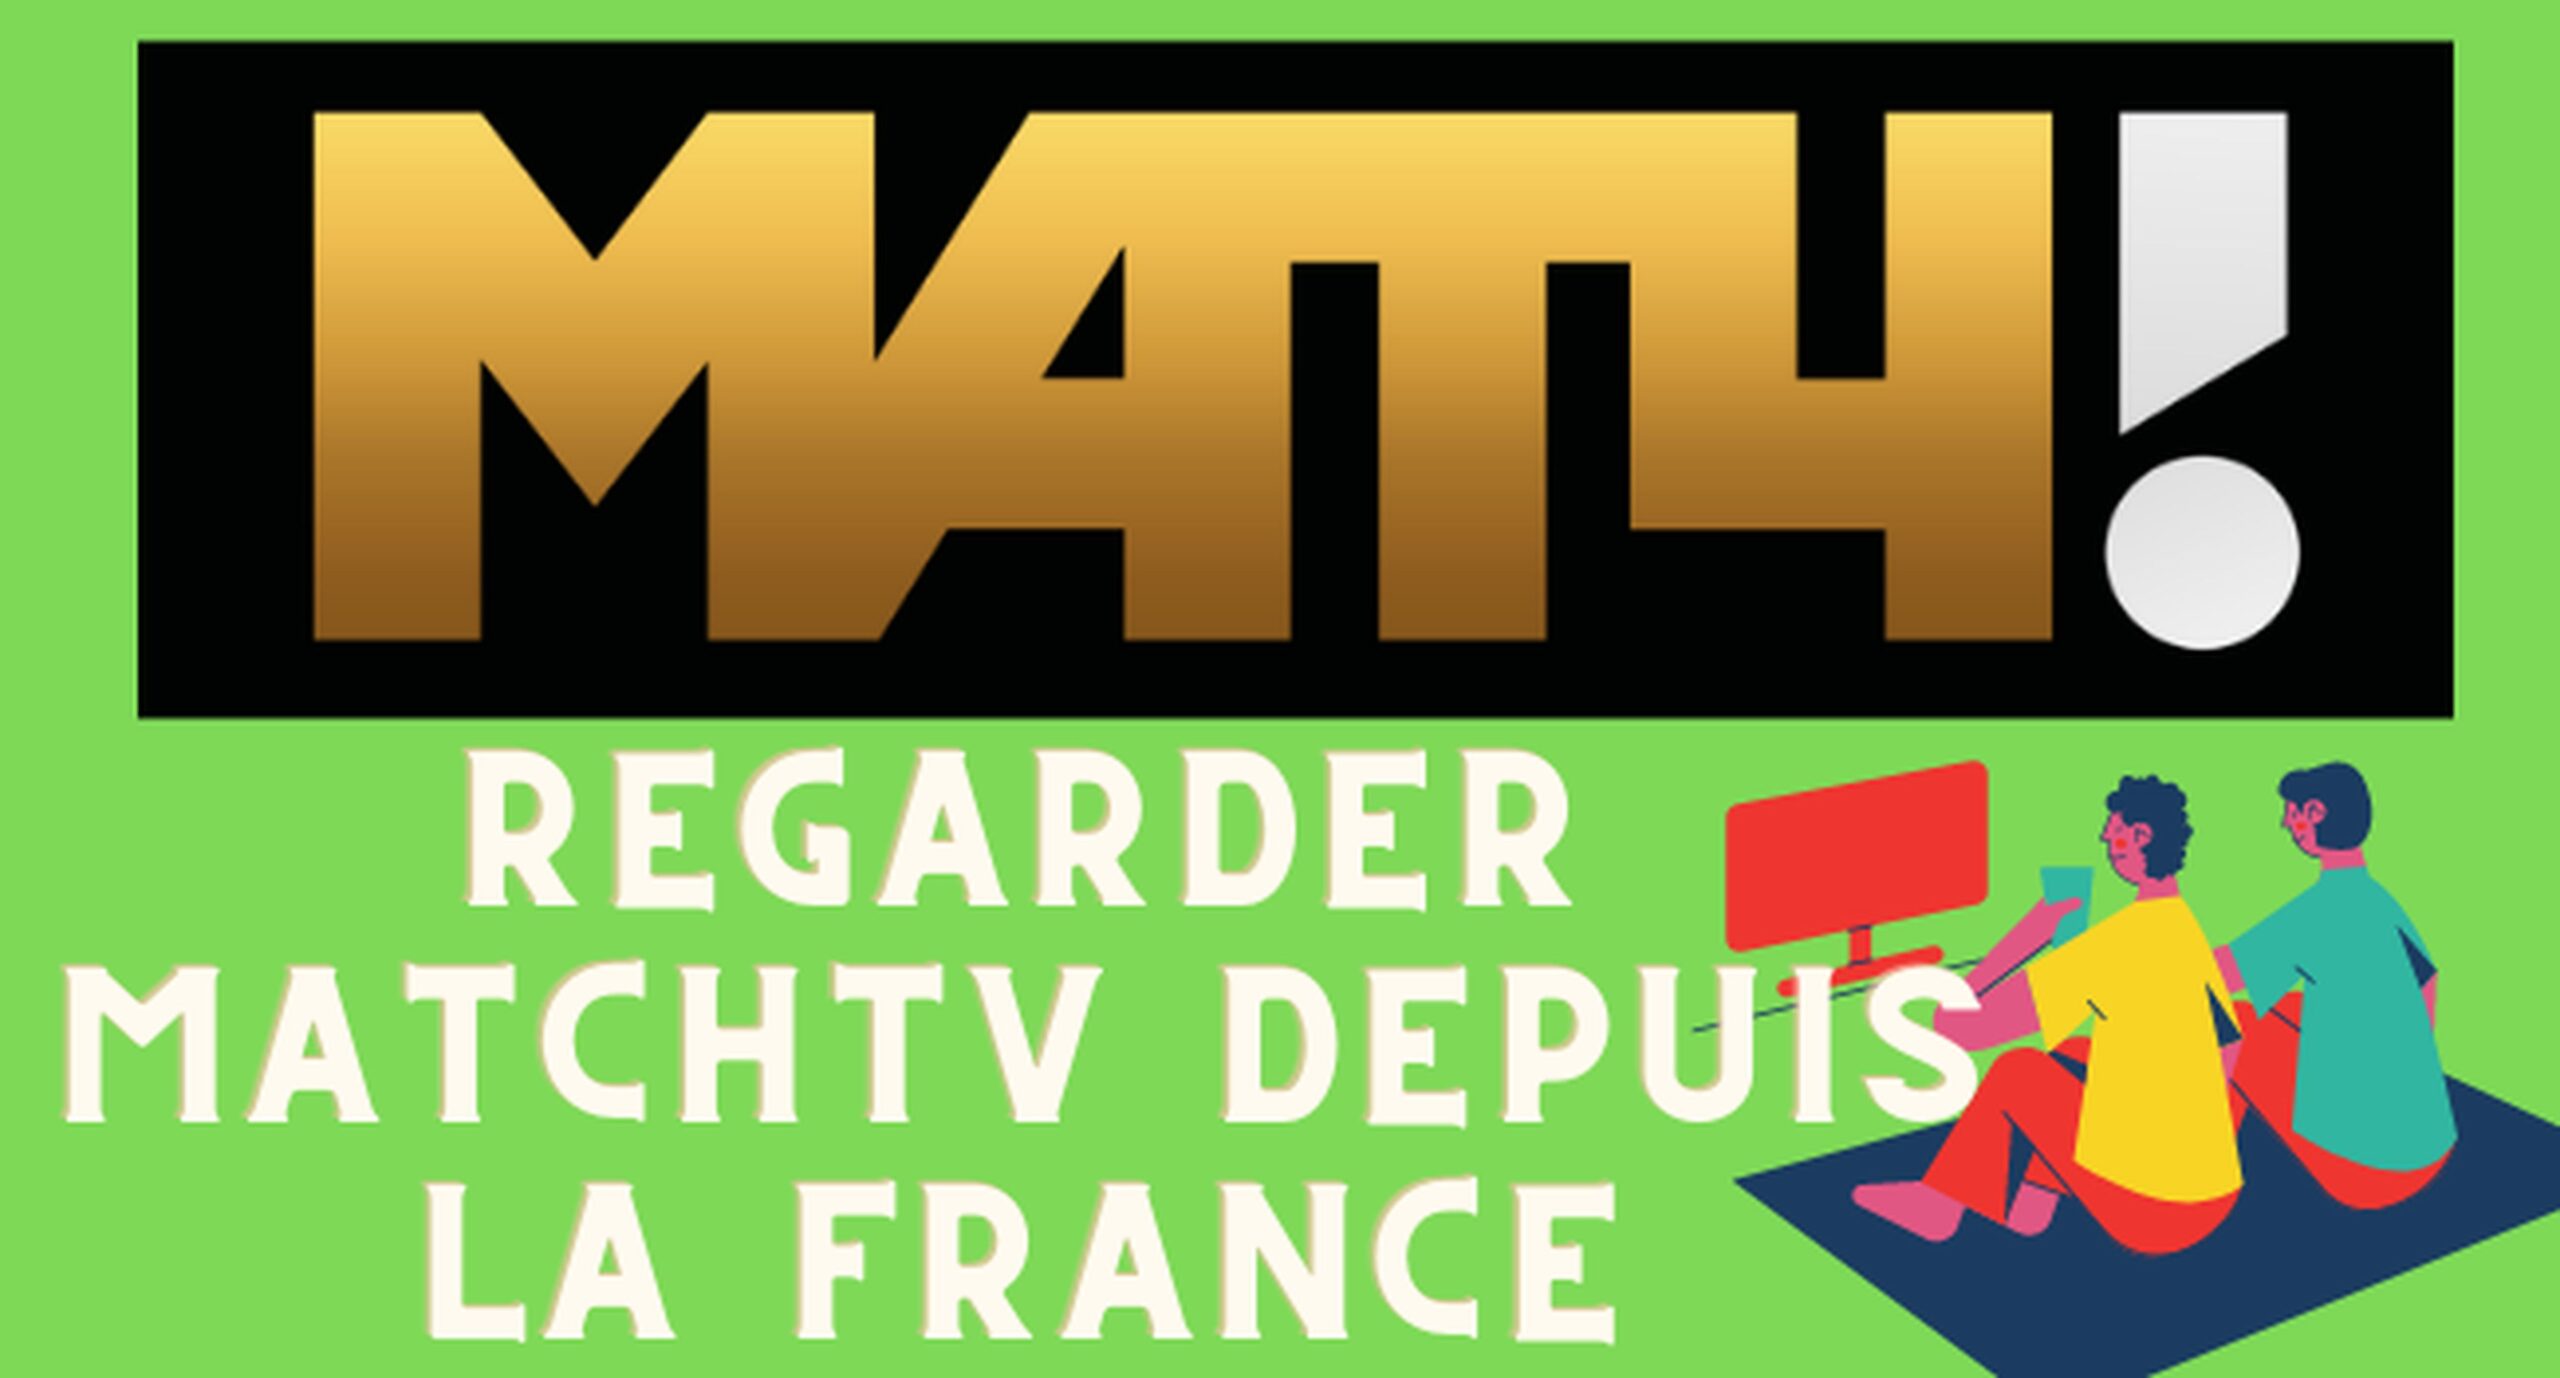 Regarder MatchTV en France avec un VPN